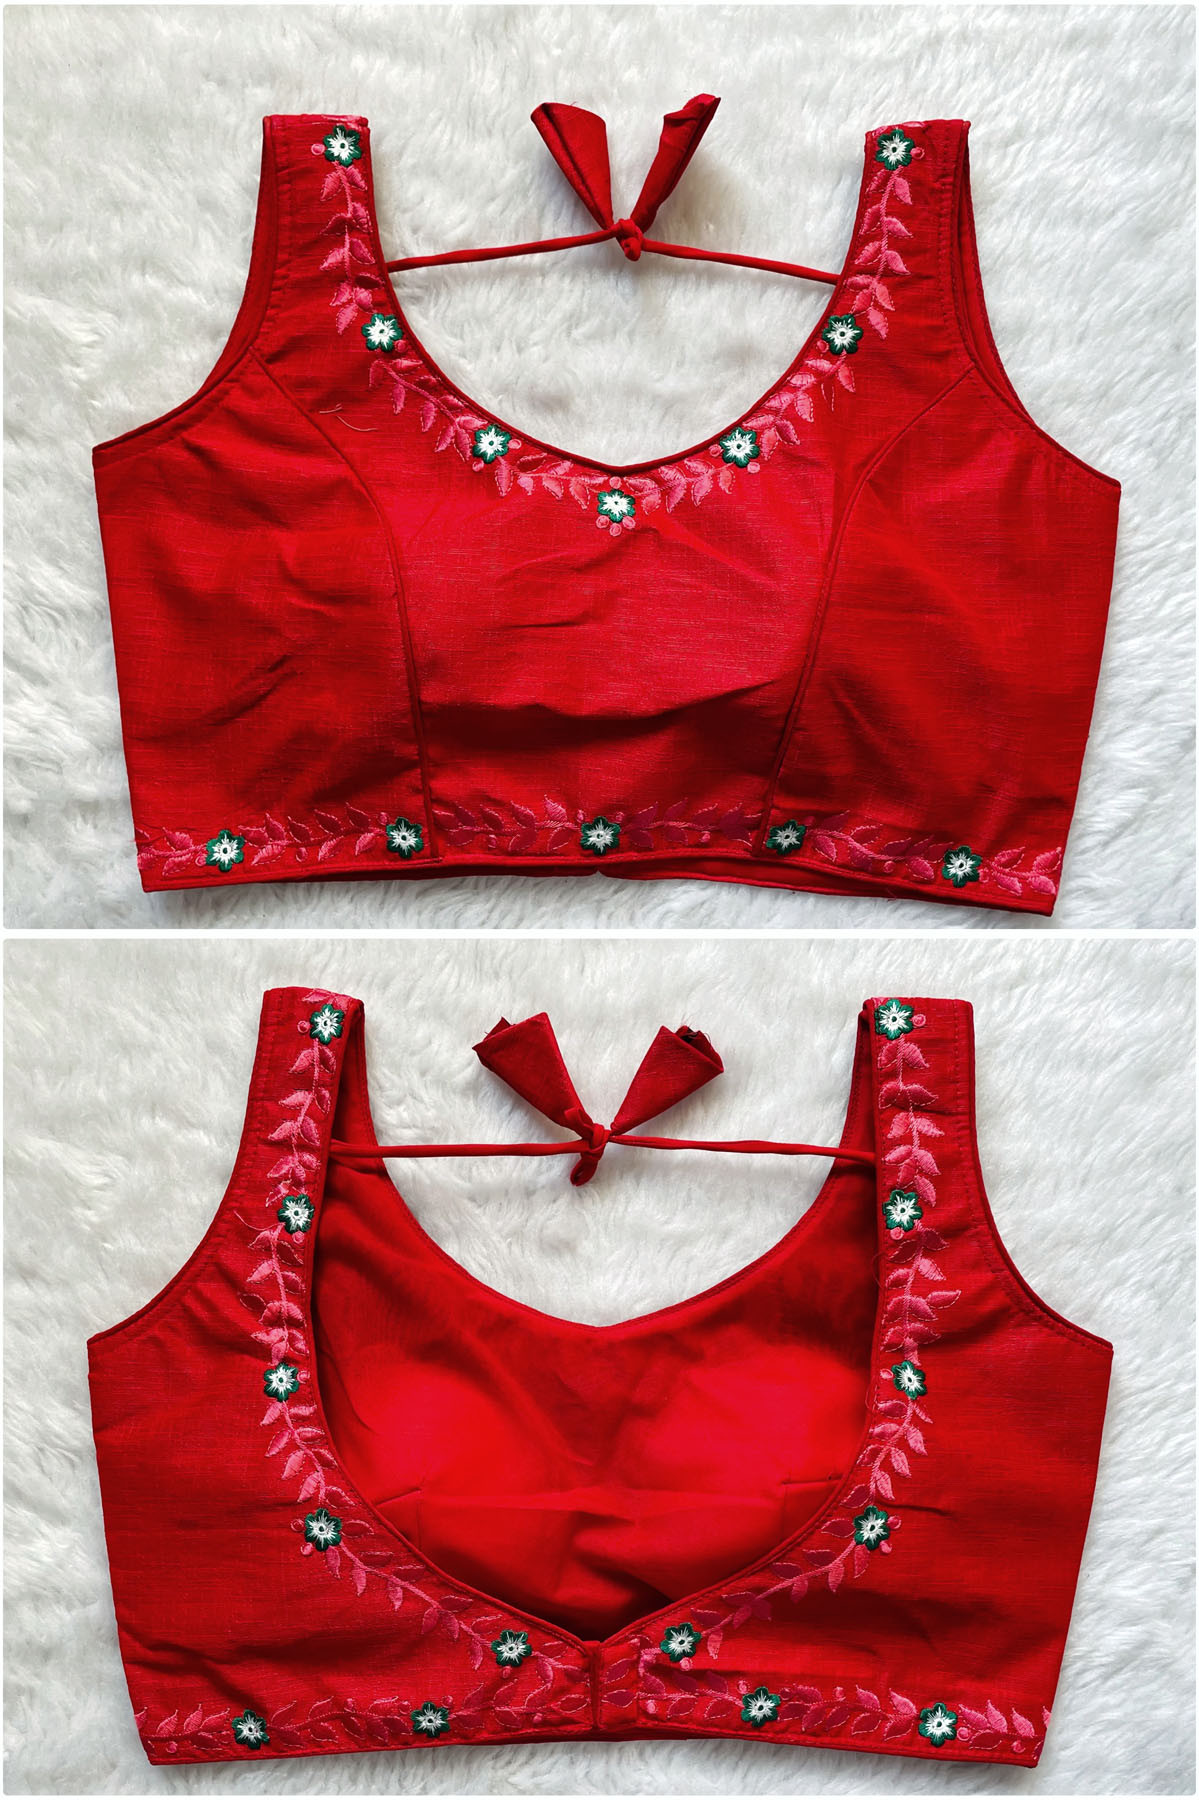 Embroidered Phantom Silk Designer Blouse - Red(S)